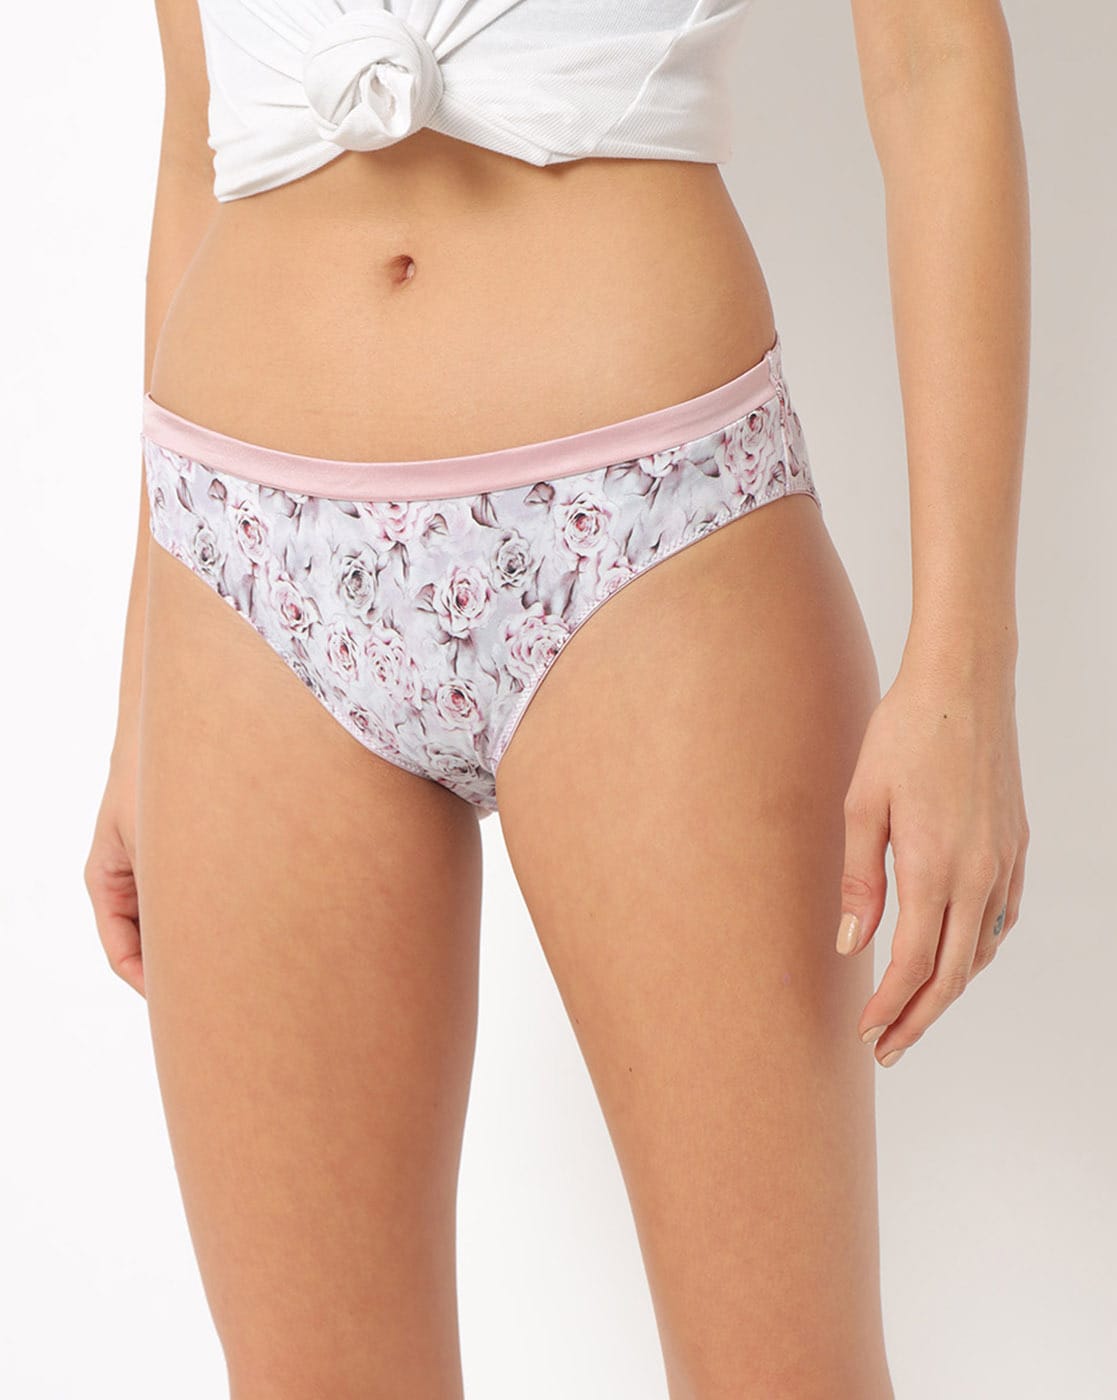 B91xZ Women's Cotton Bikini Brief Underwear Plus Size Breathable Micro-Mesh  Underwear,Pink XL